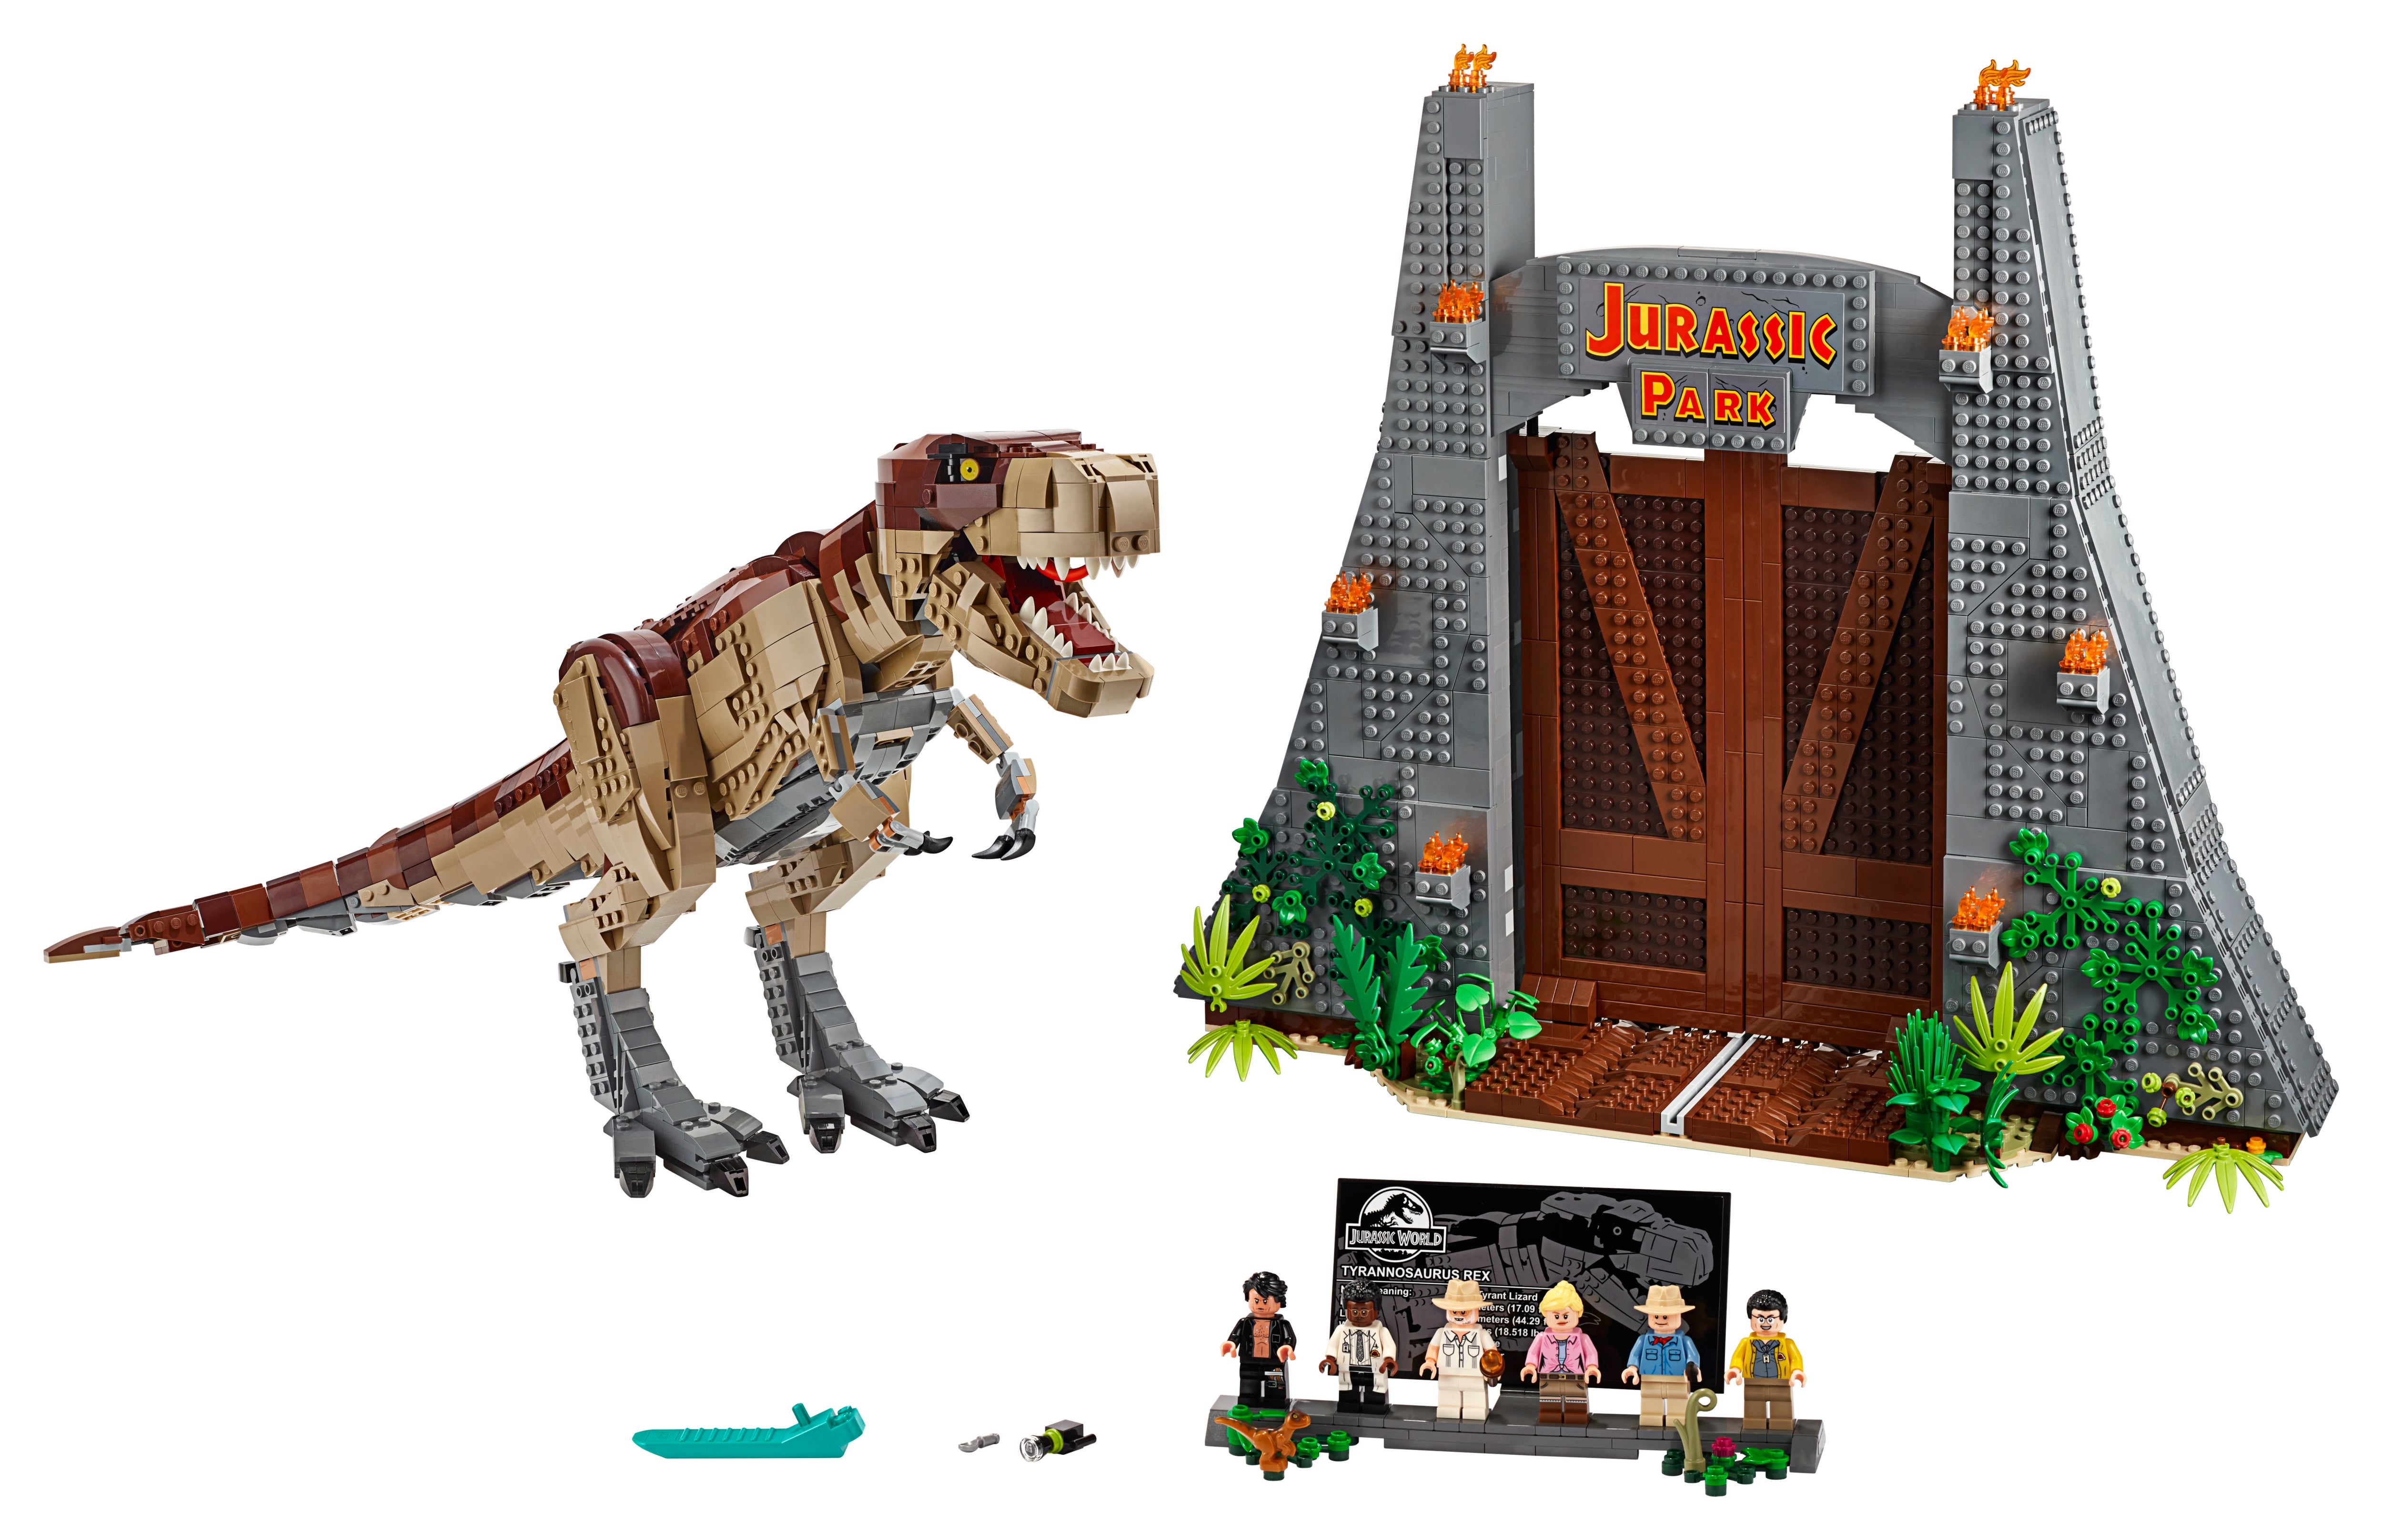 2020 Sticker 91 LEGO Jurassic World